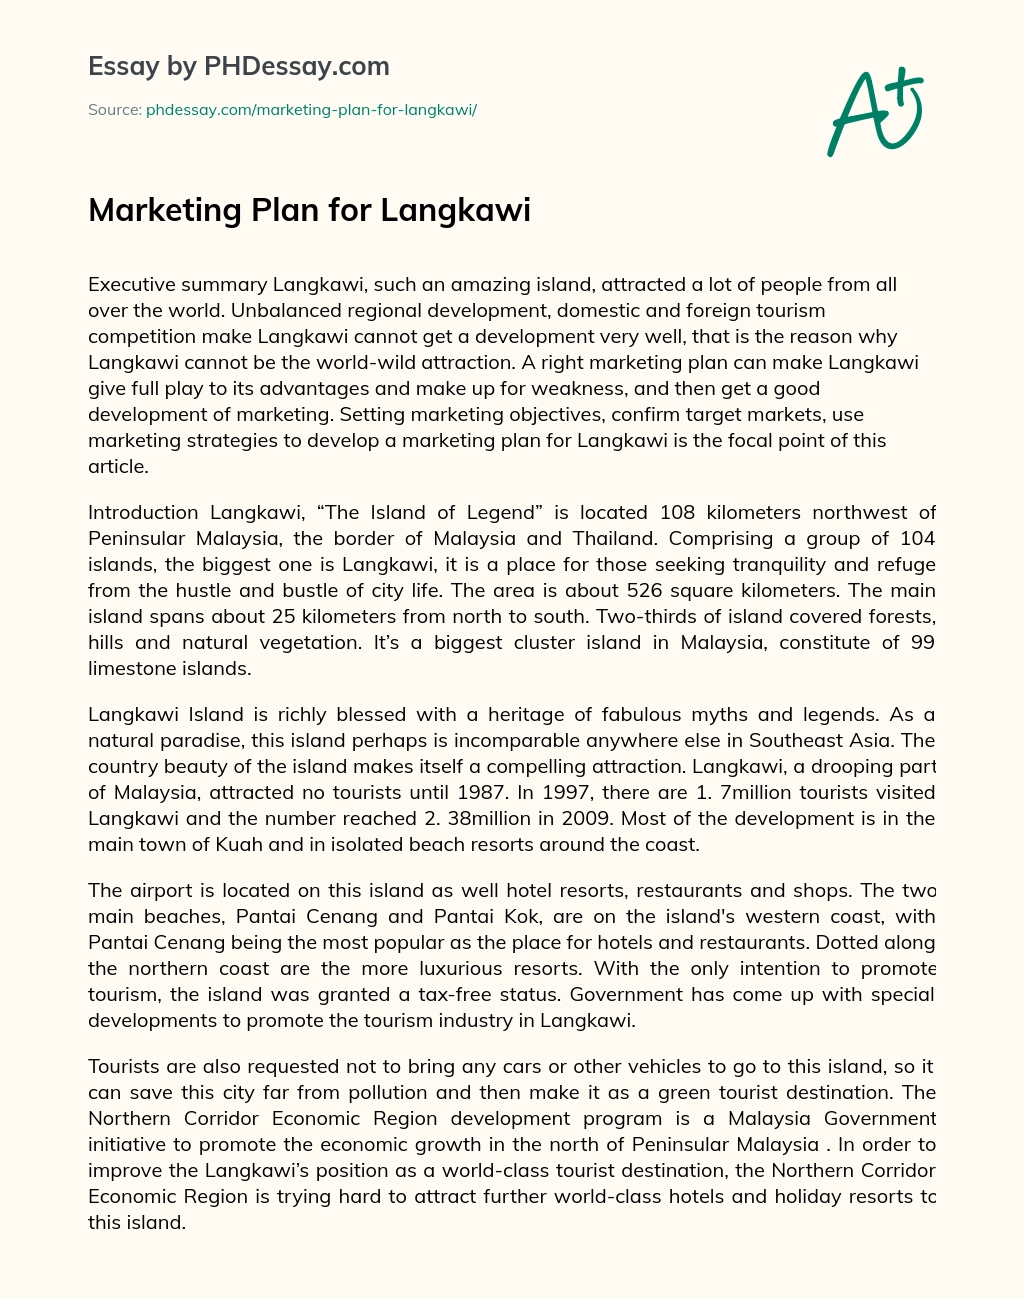 Marketing Plan for Langkawi essay